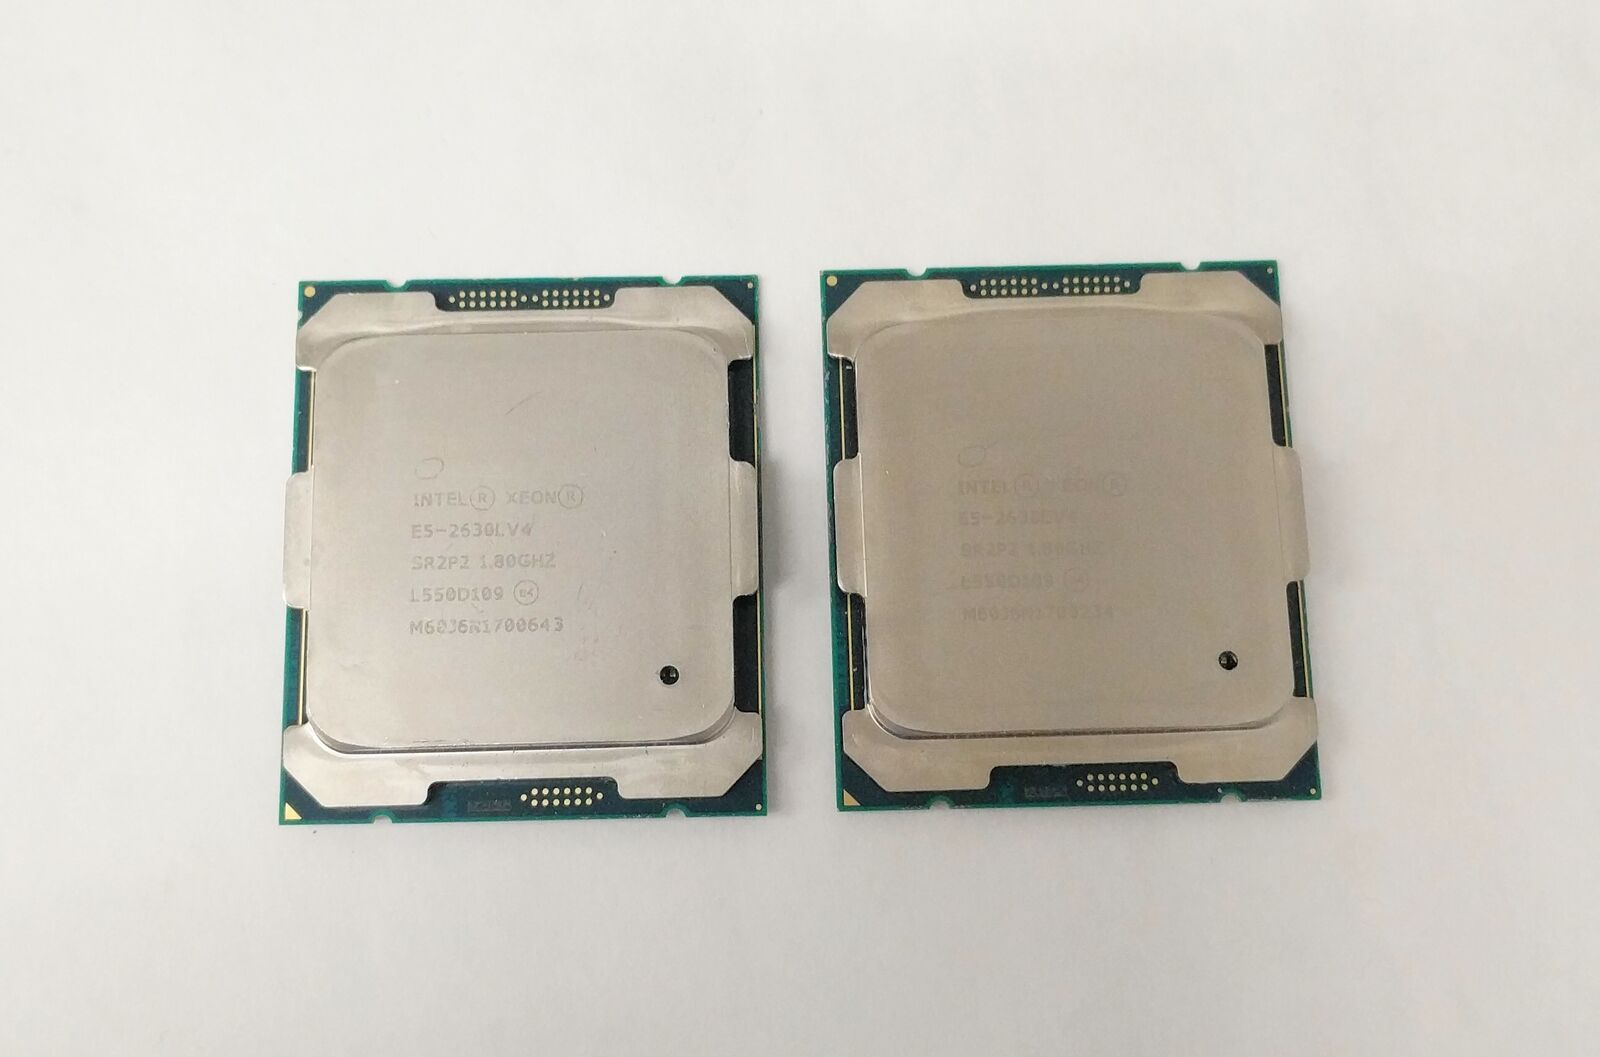 Lot of 2 Intel Xeon E5-2630LV4 1.80GHz 10 Core 25MB FCLGA2011-3 CPU SR2P2